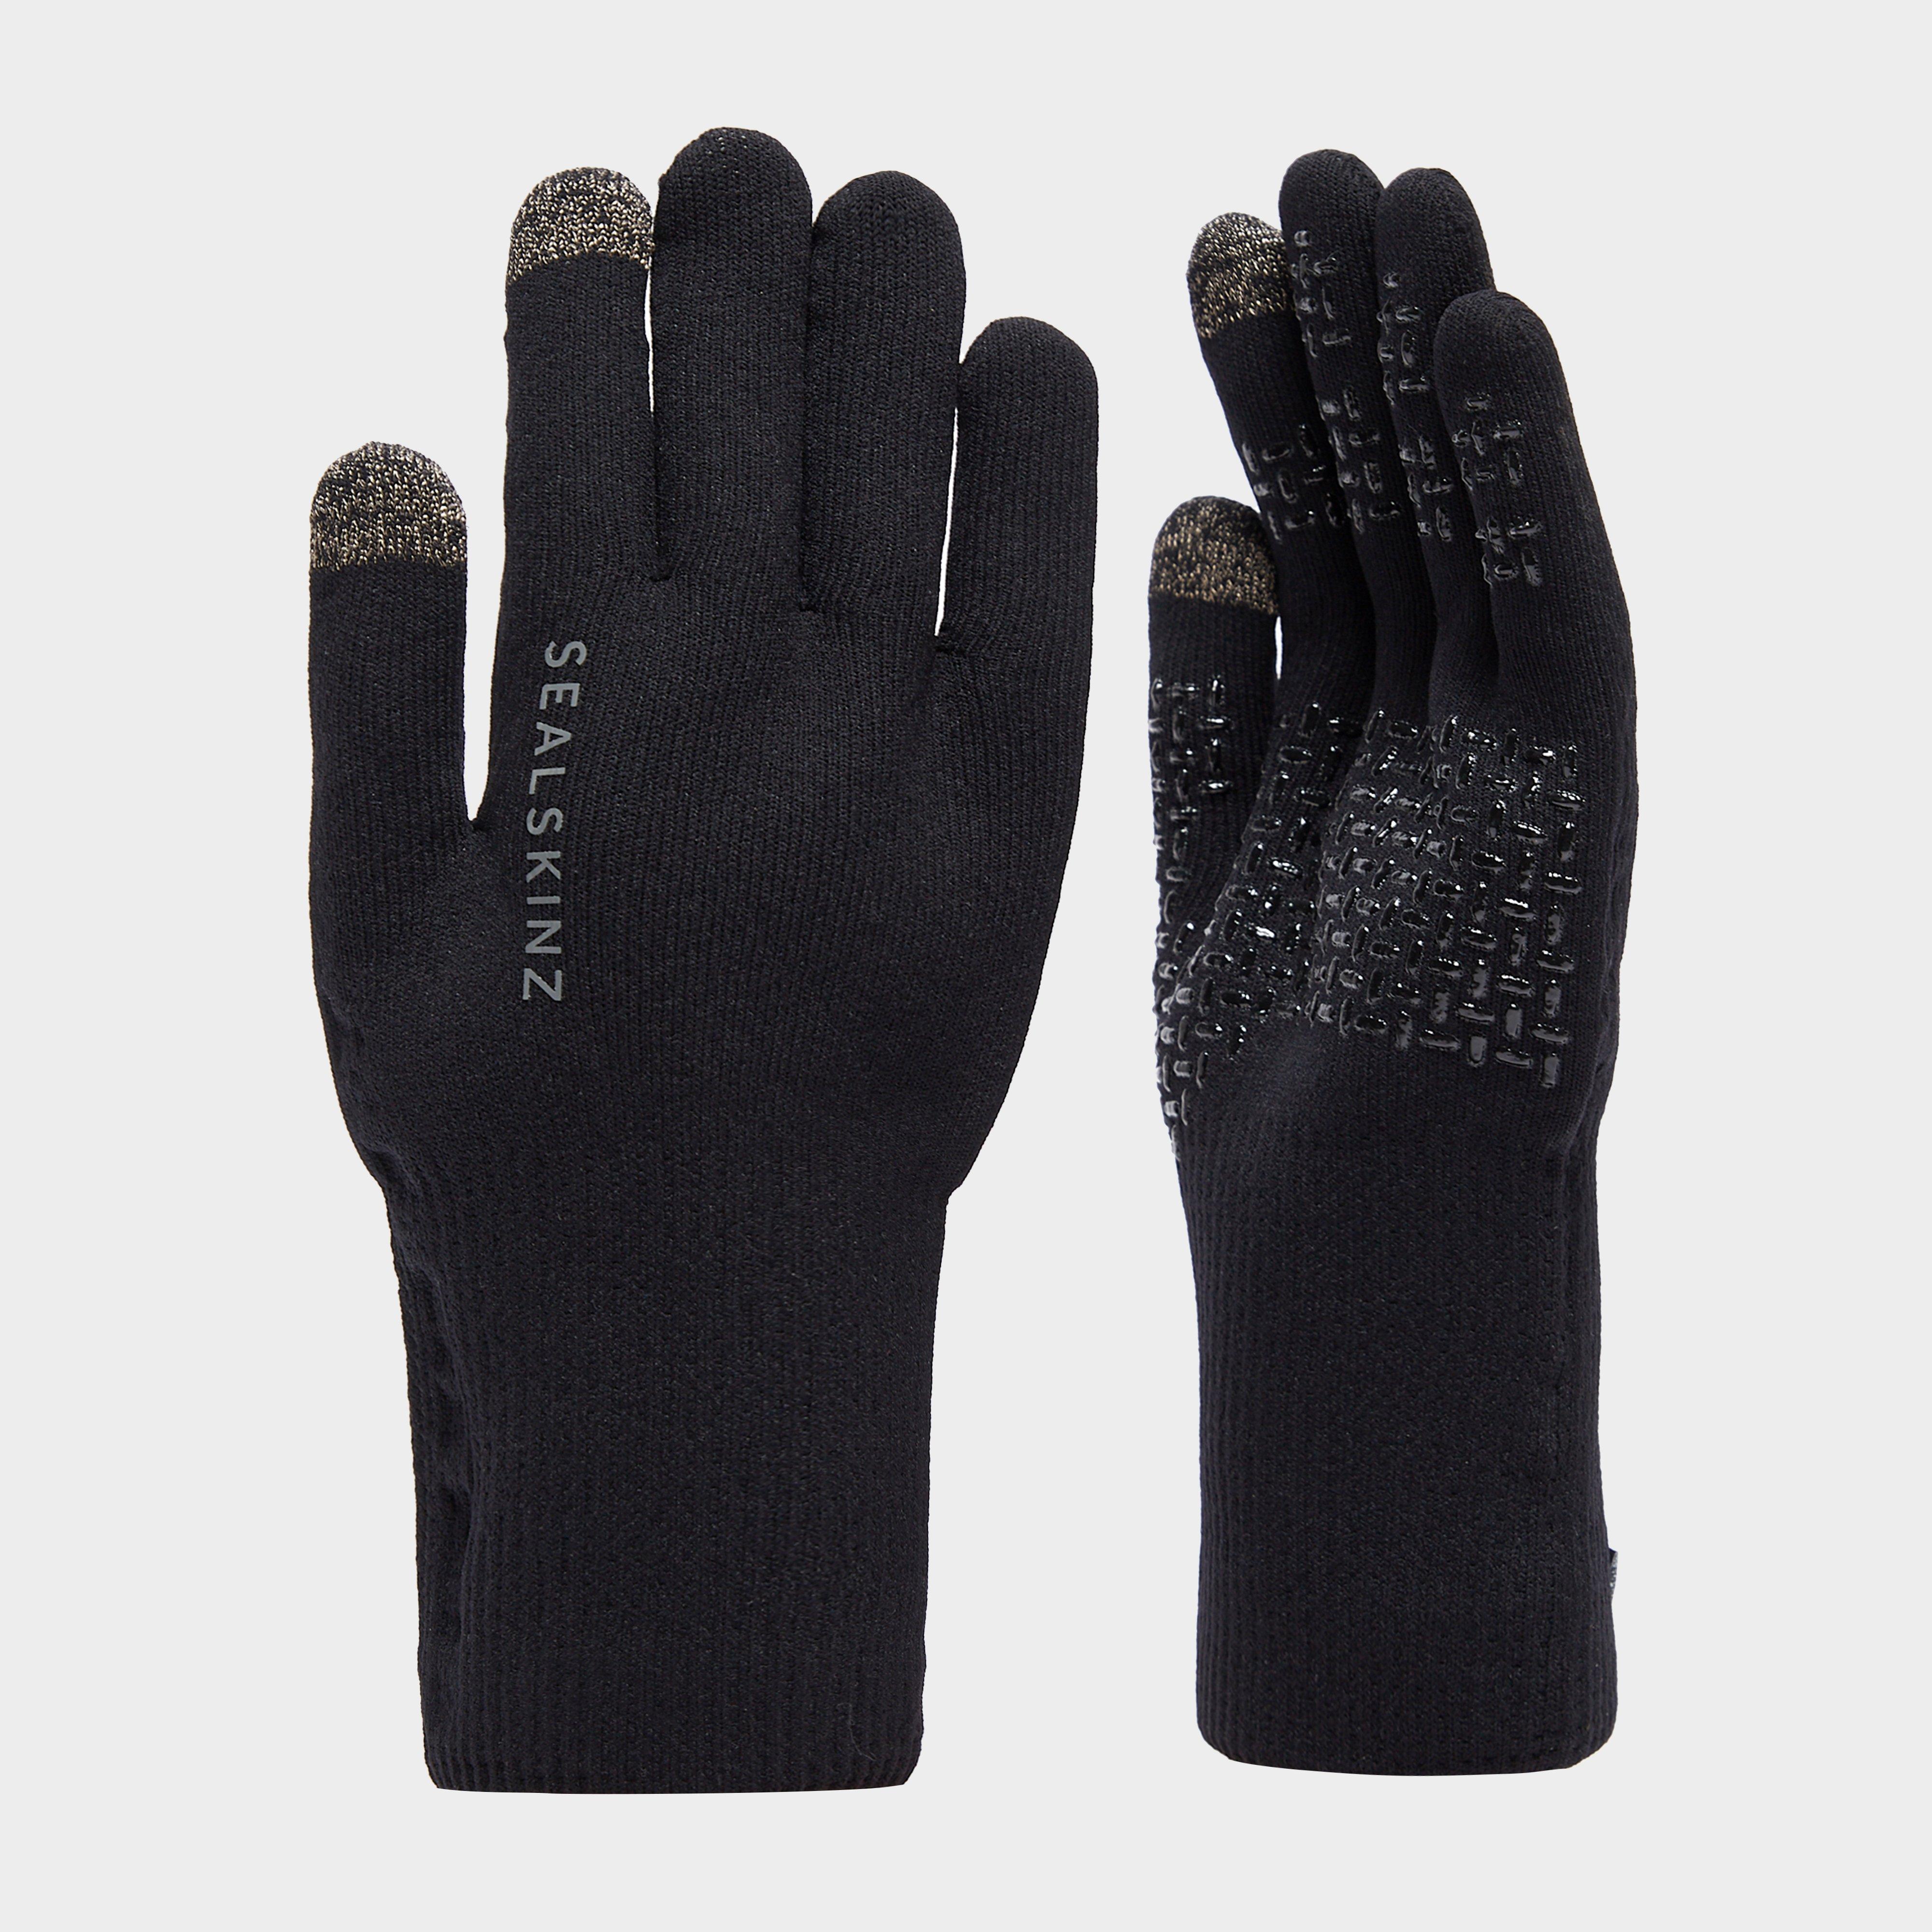  Sealskinz Waterproof All Weather Ultra Grip Glove, Black